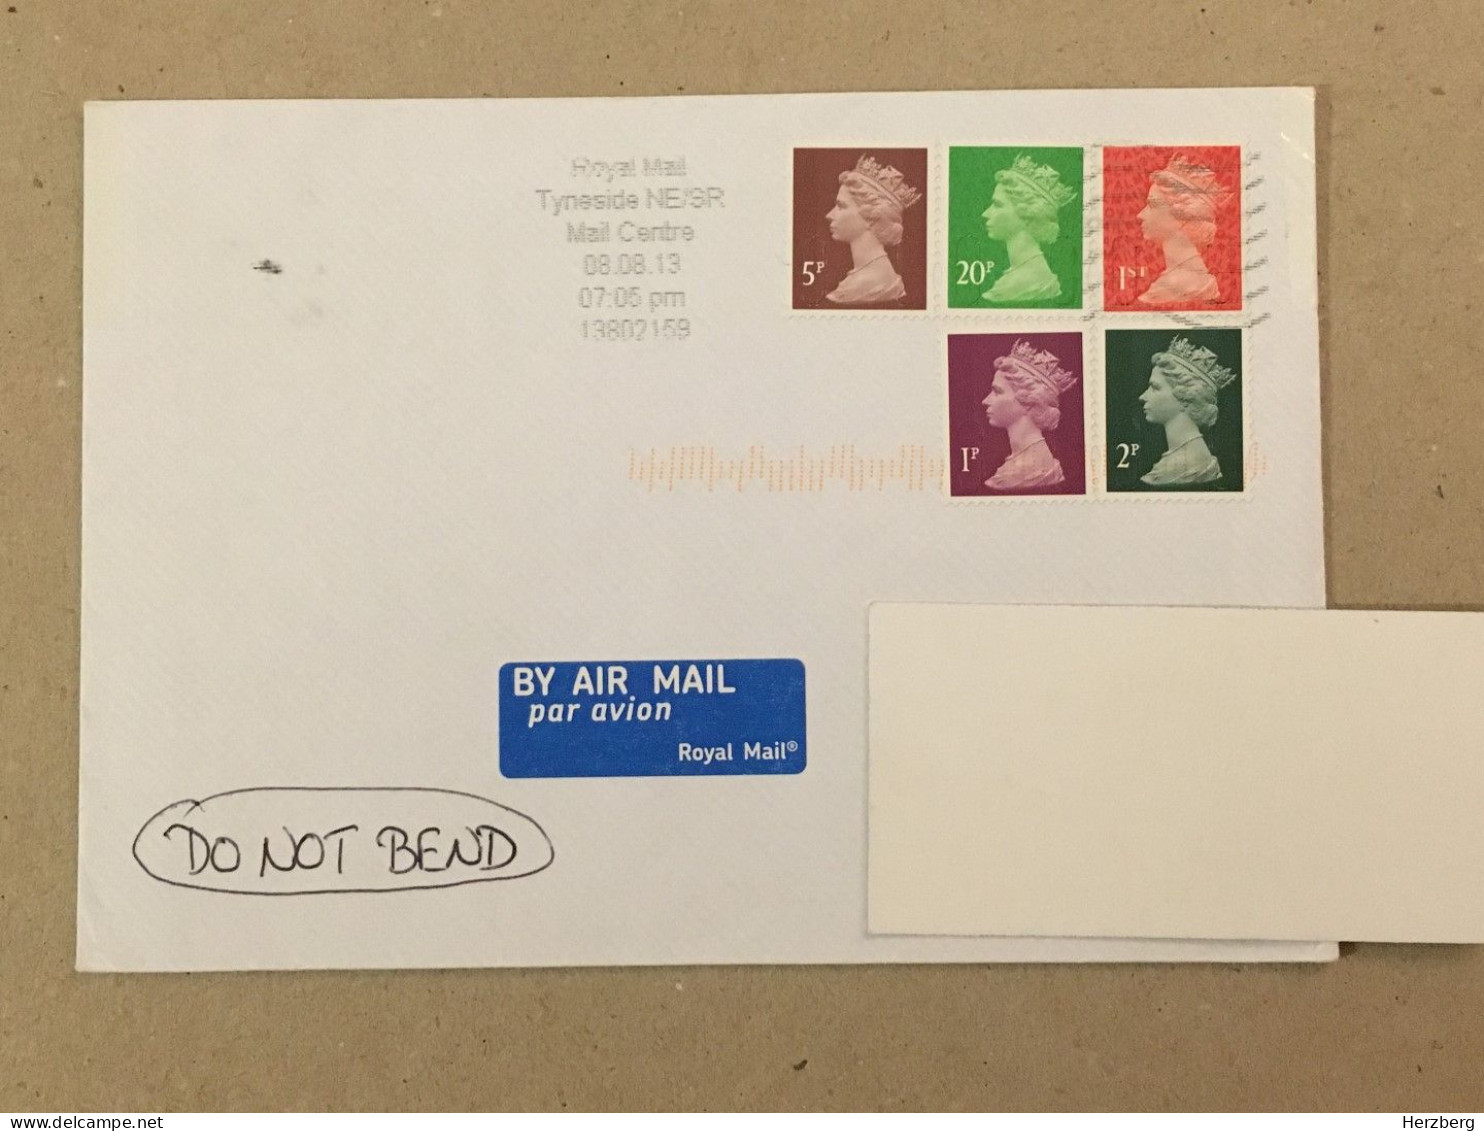 Great Britain UK United Kingdom England - Used Letter Stamp Circulated Cover Postmark Elisabeth II 2013 - Storia Postale